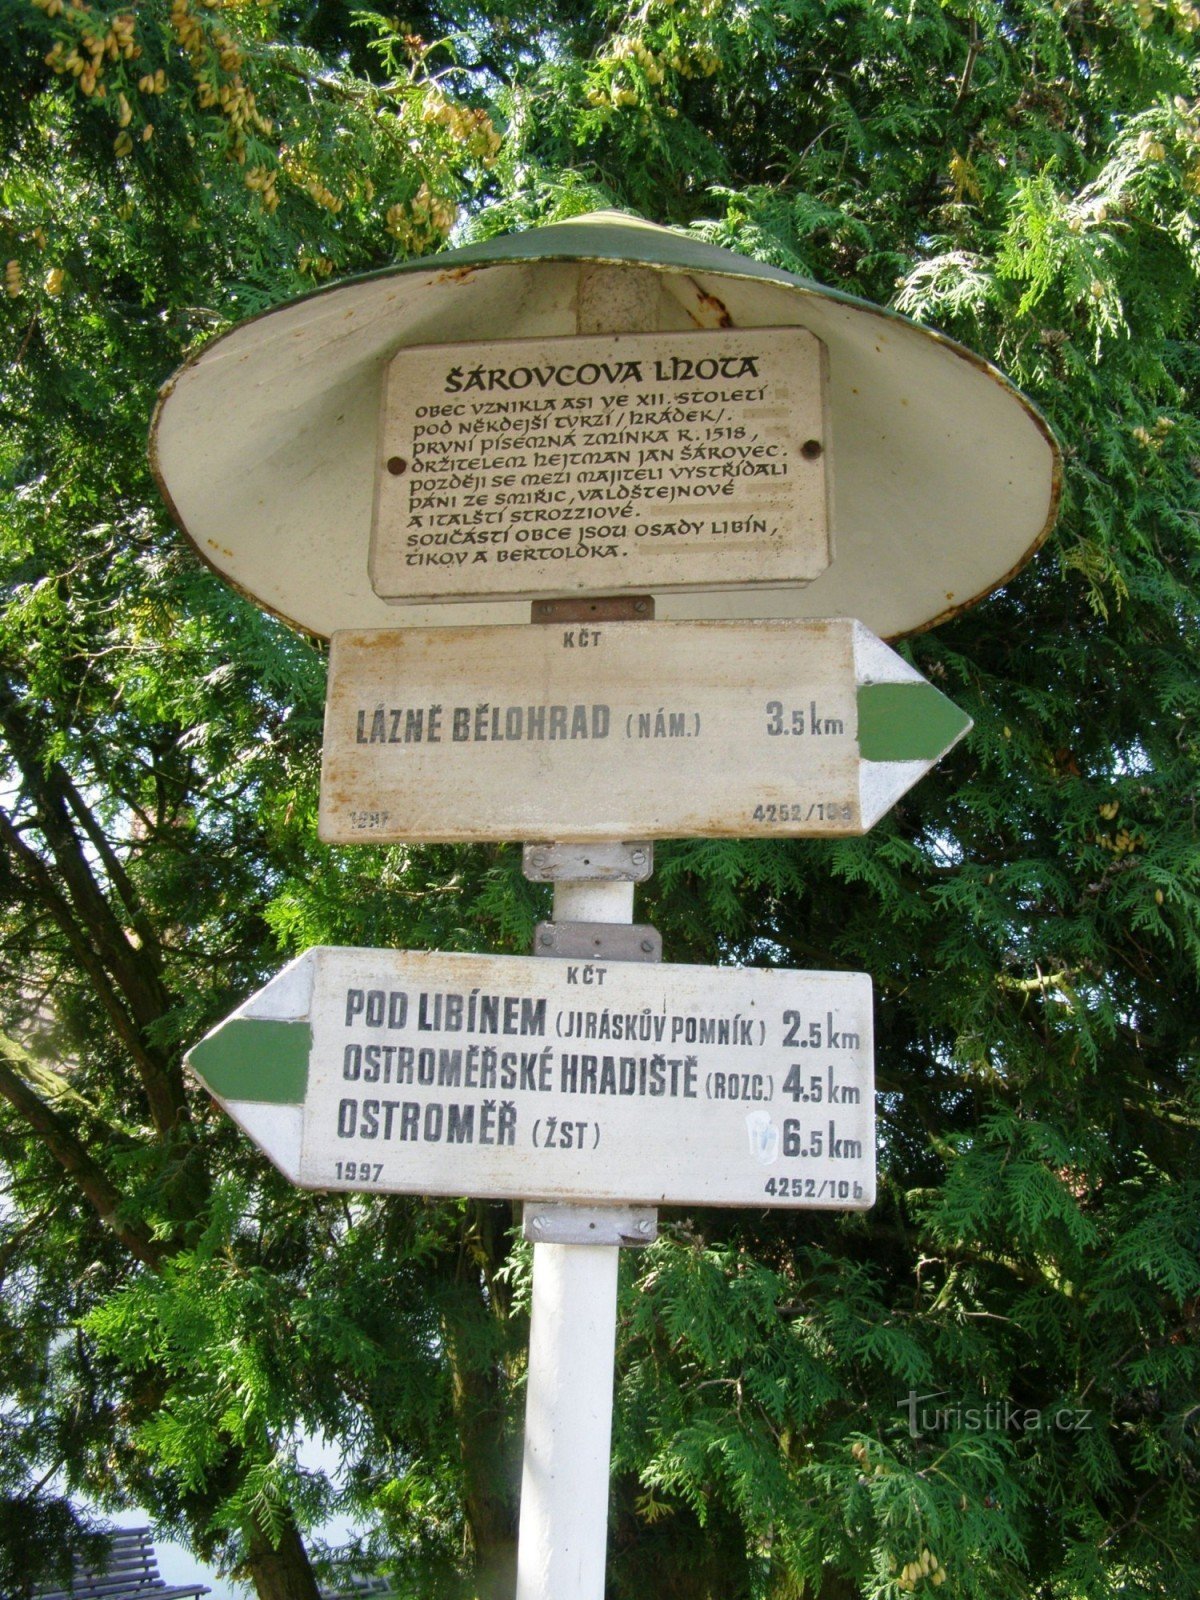 ngã tư du lịch của Šárovcova Lhota